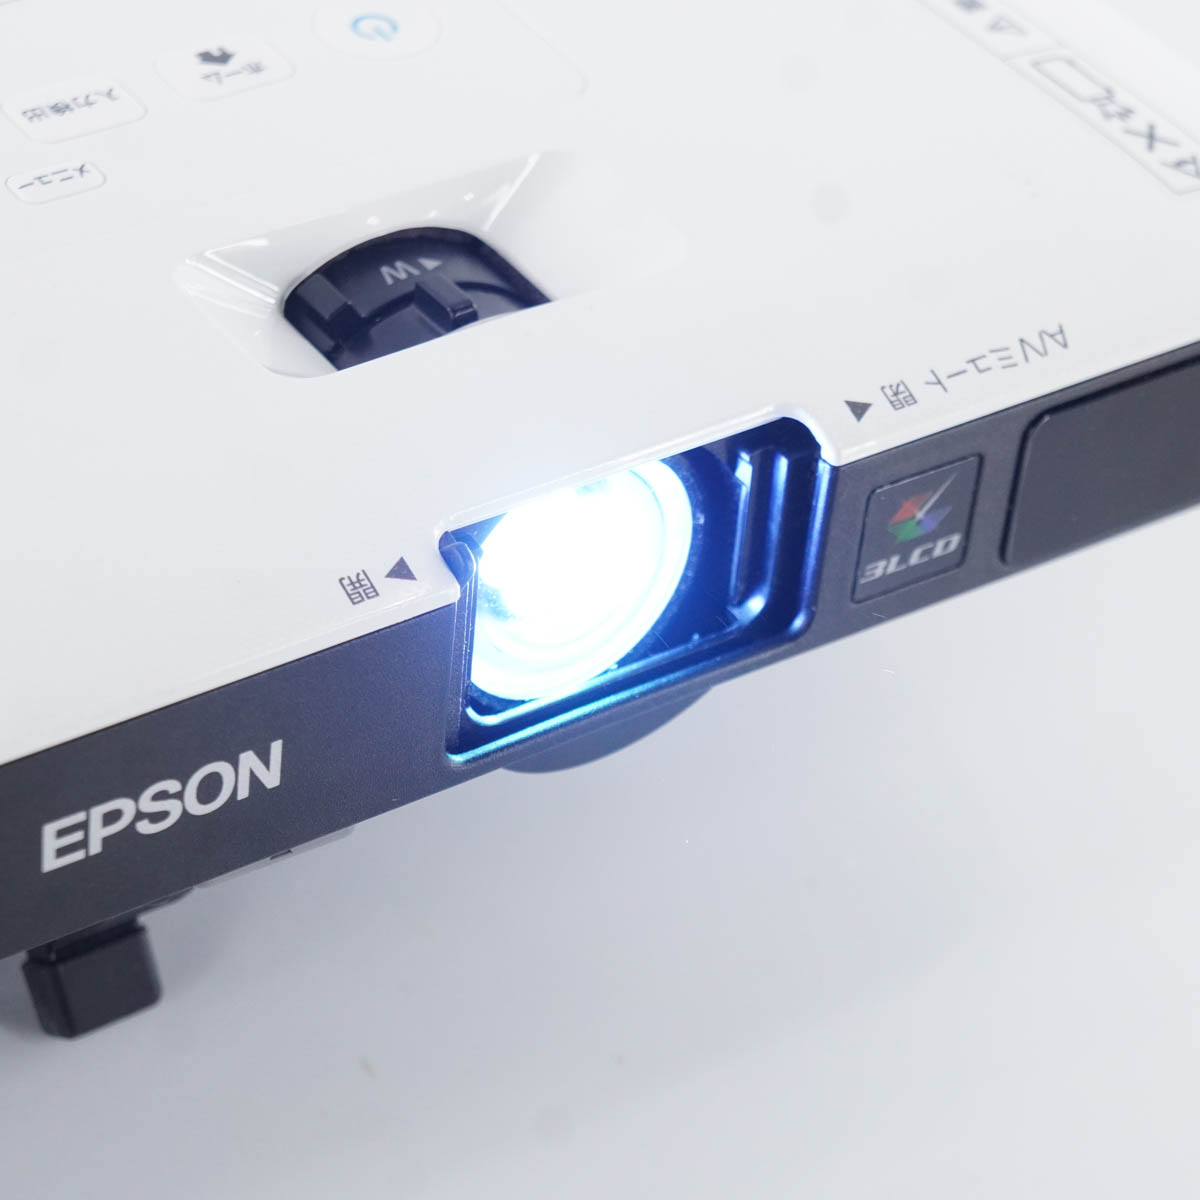 PG]USED 8日保証 ランプ323時間 EPSON EB-1780W H795D プロジェクター 3000lm WXGA HDMI 電源コード  ソフトウェア リモコン [04845-0028] その他 中古販売分析機器計測器総合商社ディルウィングス